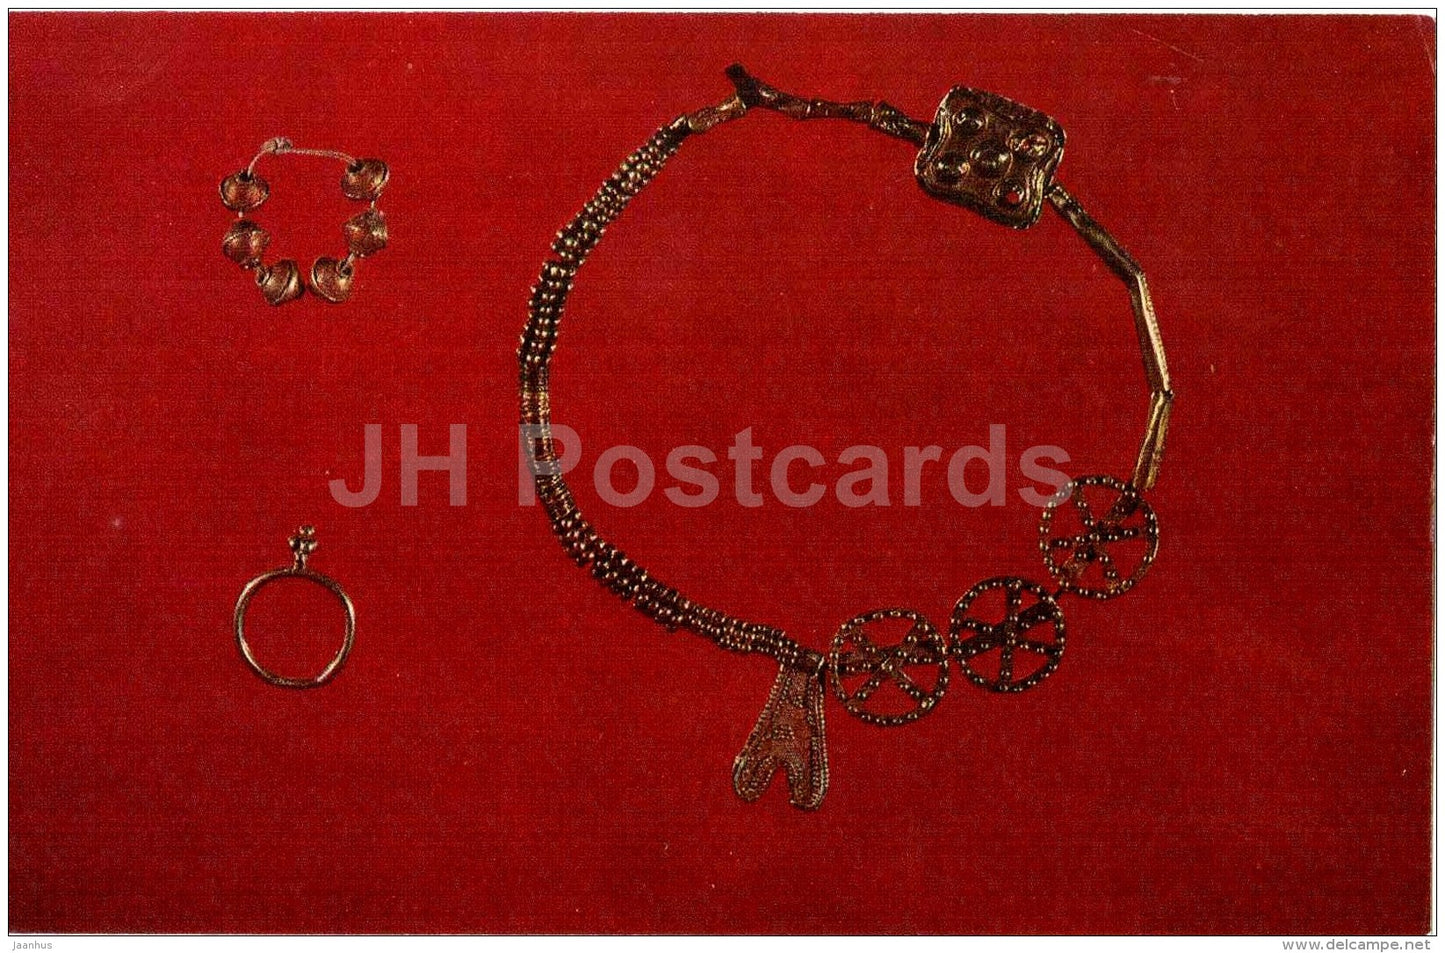 Bead Ornament , Ring , Necklace , II Millennium BC - Jewellery - Armenian History Museum - 1978 - Russia USSR - unused - JH Postcards